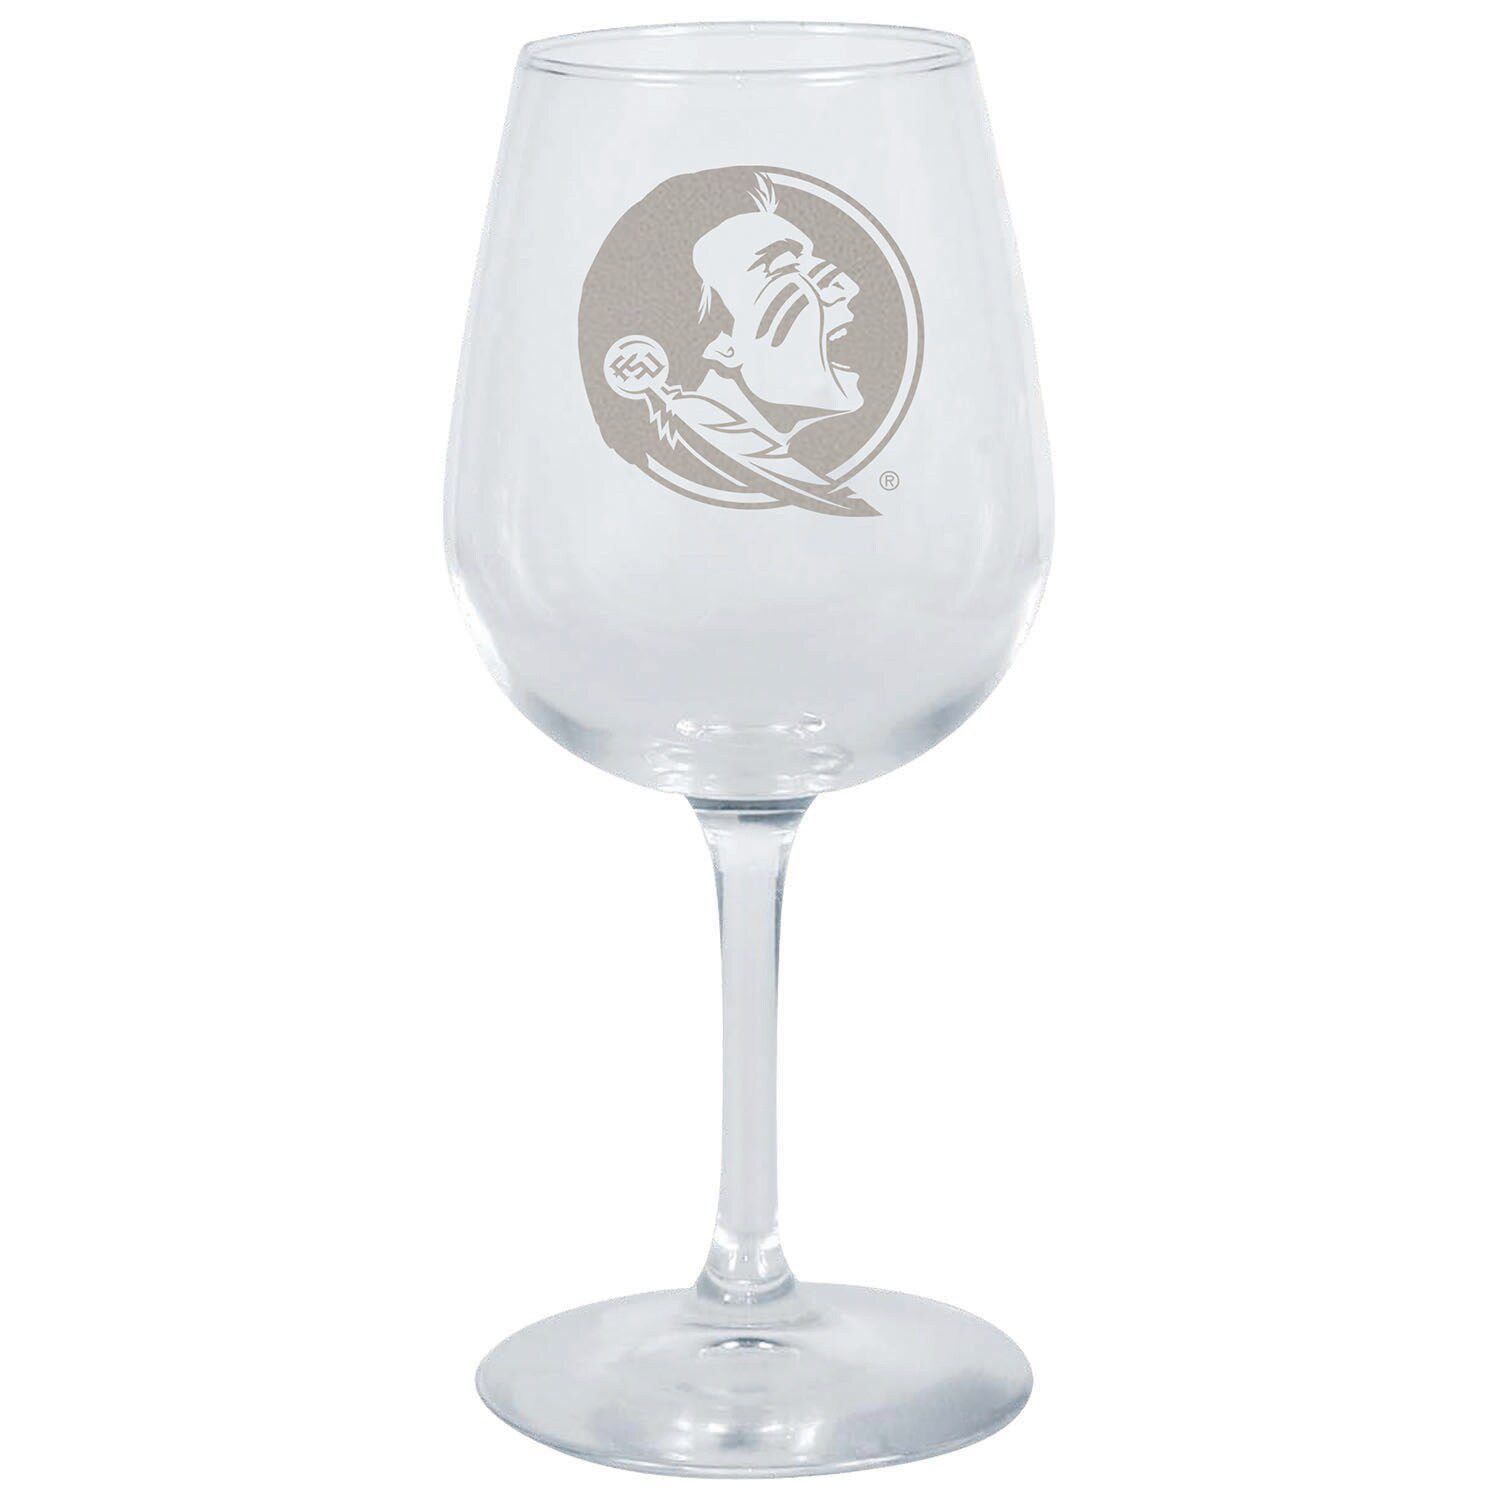 Image for Unbranded Florida State Seminoles 12.75oz. Stemmed Wine Glass at Kohl's.